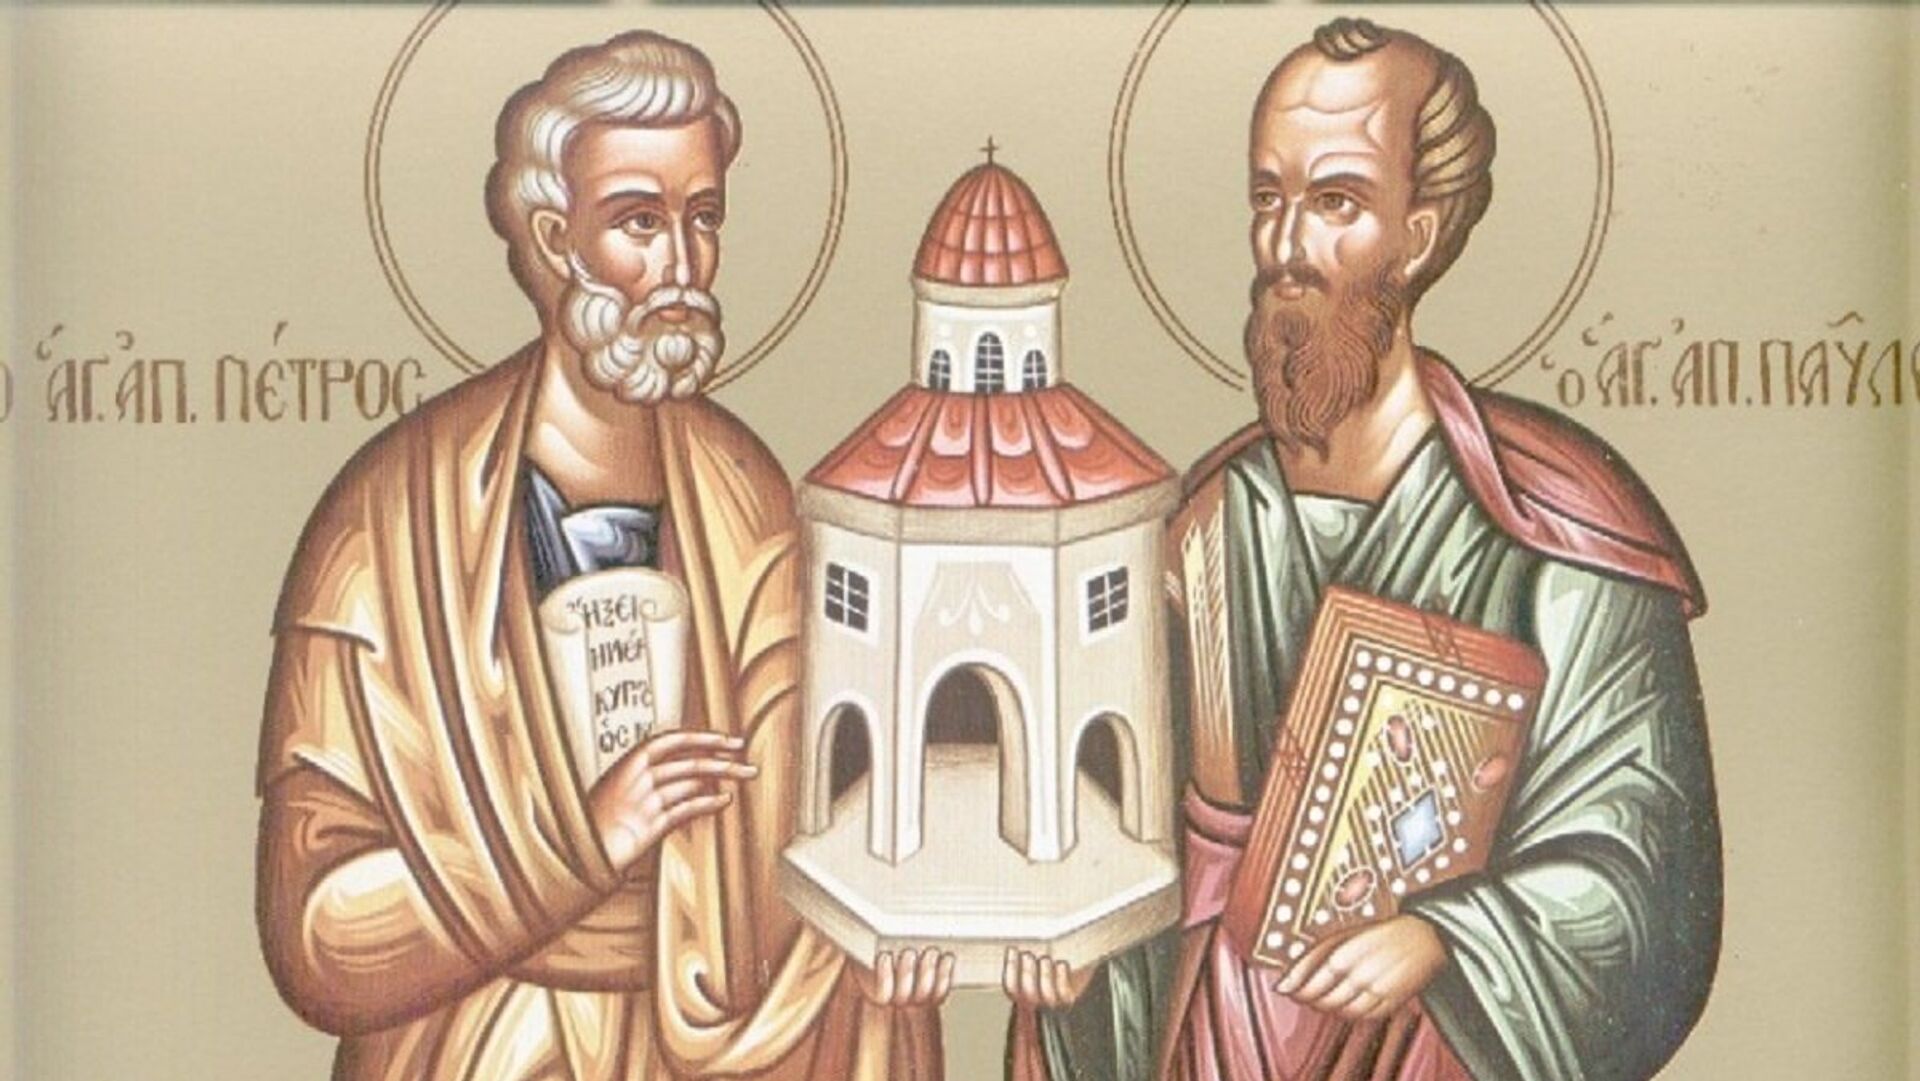 Icoana Sfinților Petru și Pavel - Sputnik Moldova, 1920, 12.07.2021